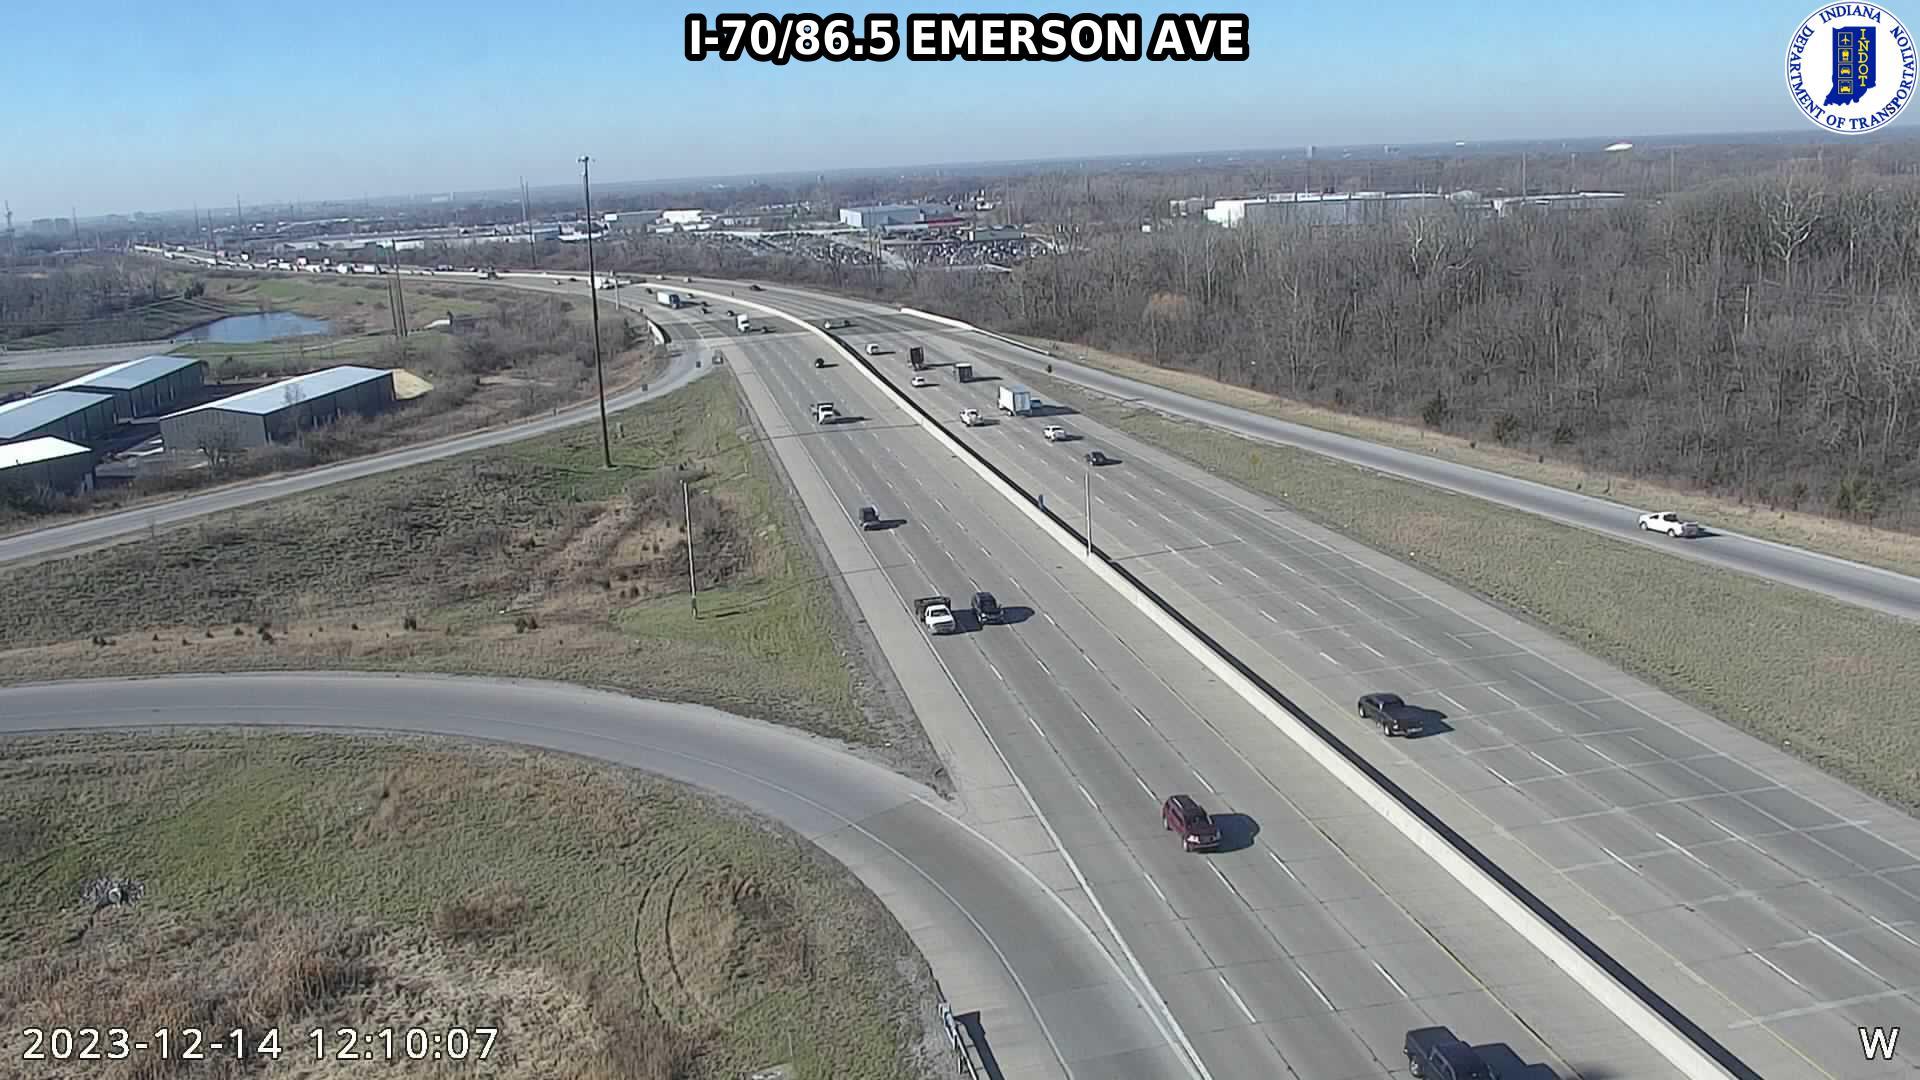 Traffic Cam Otterbein: I-70: I-70/86.5 EMERSON AVE